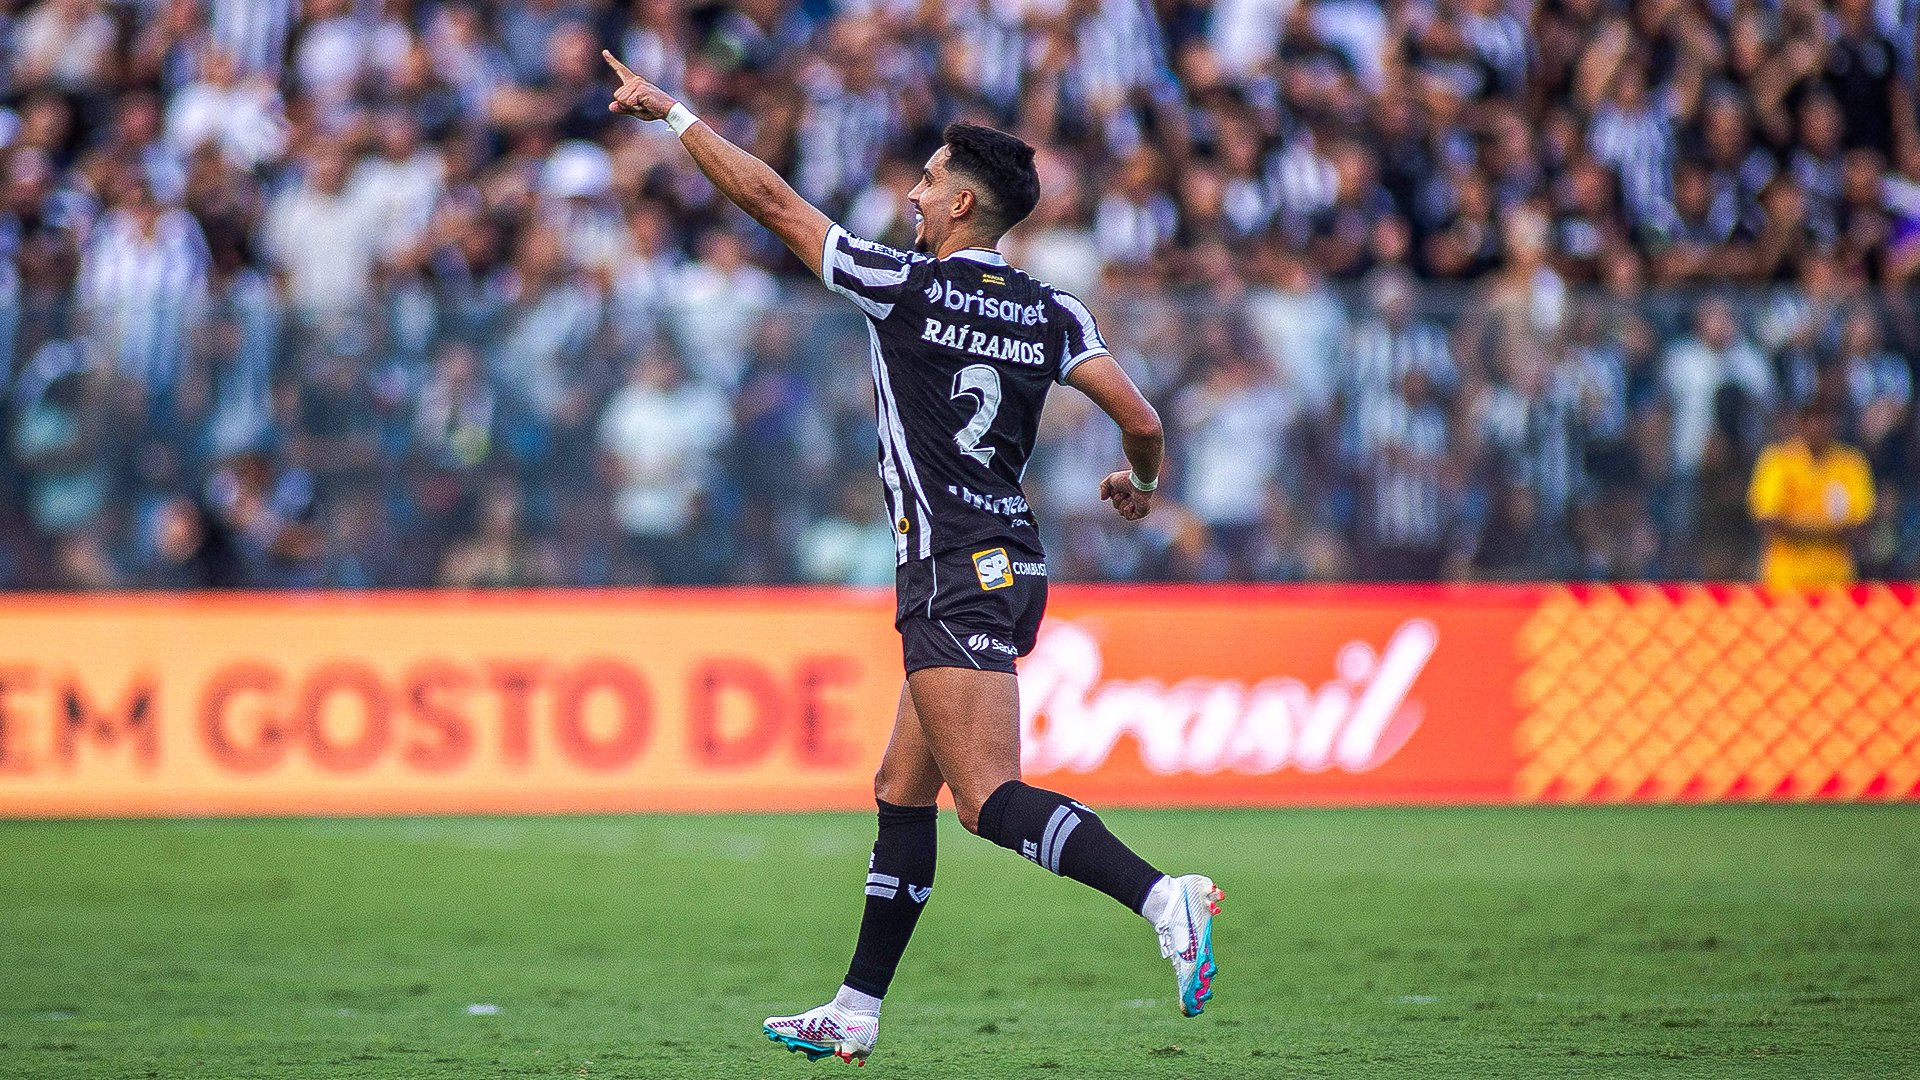 Raí Ramos marcou seu primeiro gol com a camisa do Ceará. (Foto: Felipe Santos/Ceará)